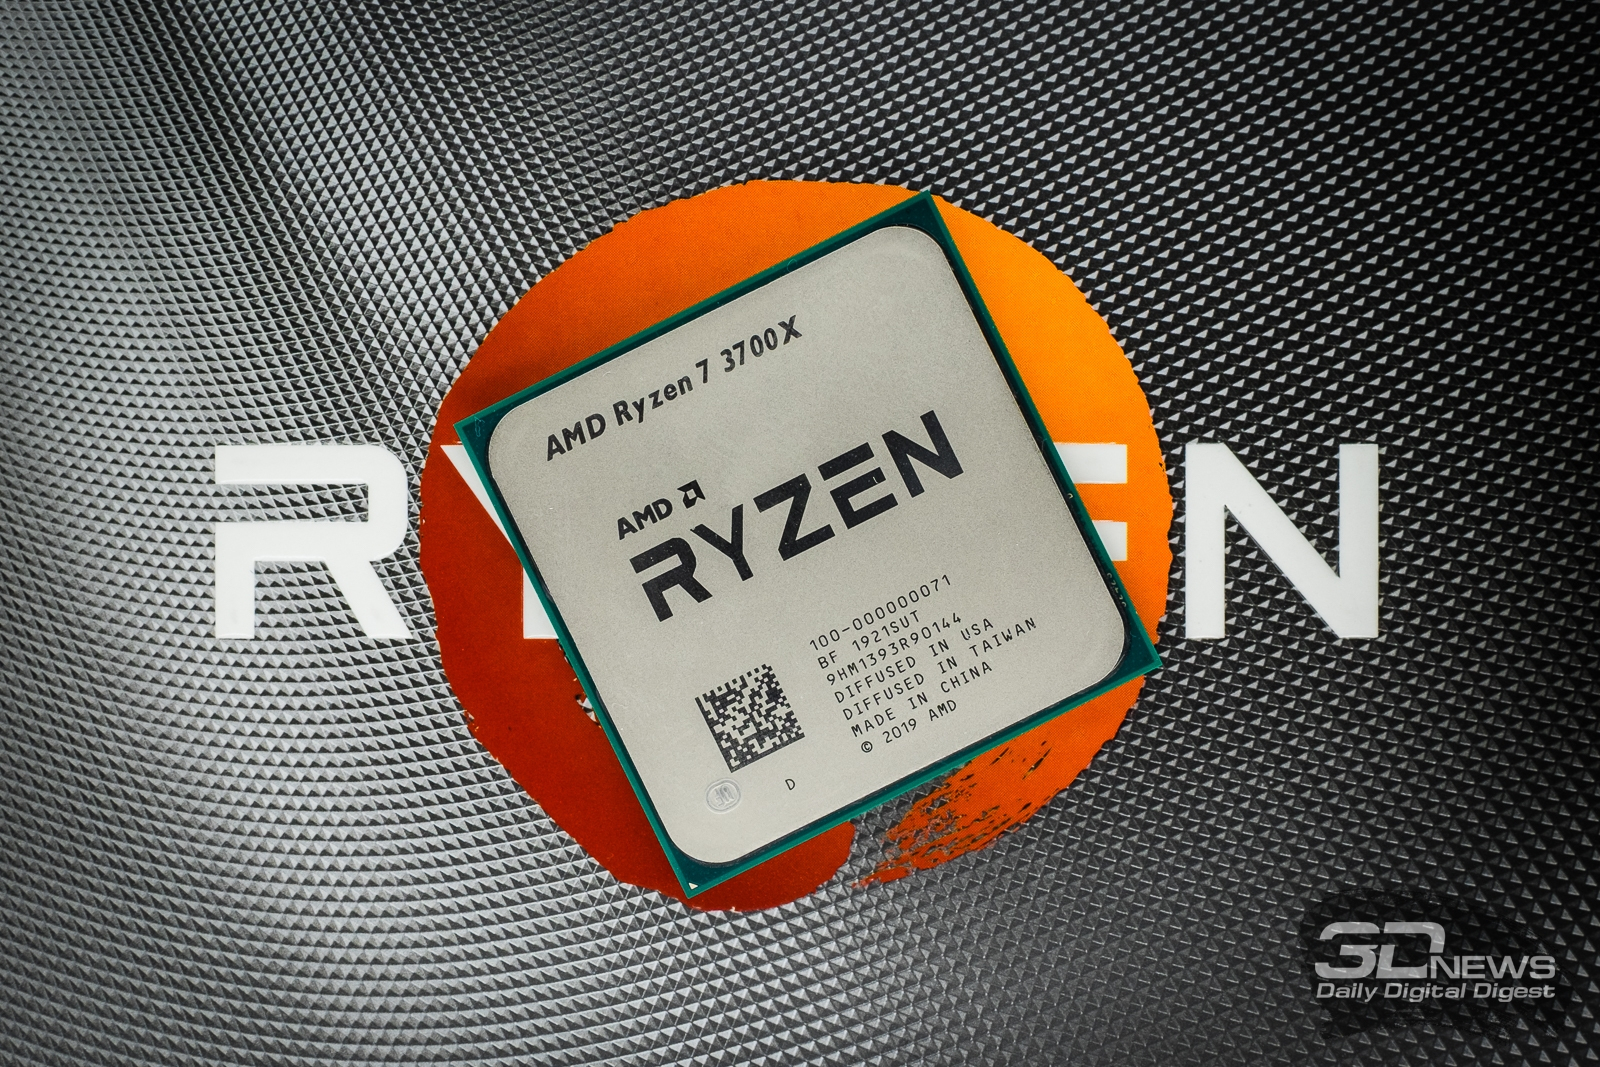 Amd ryzen 7 3700x 8 core. Ryzen 7 3700x. Процессор AMD Ryzen 7. Процессор AMD Ryzen 7 3700x OEM. Процессор AMD Ryzen 7 3700x am4 OEM.